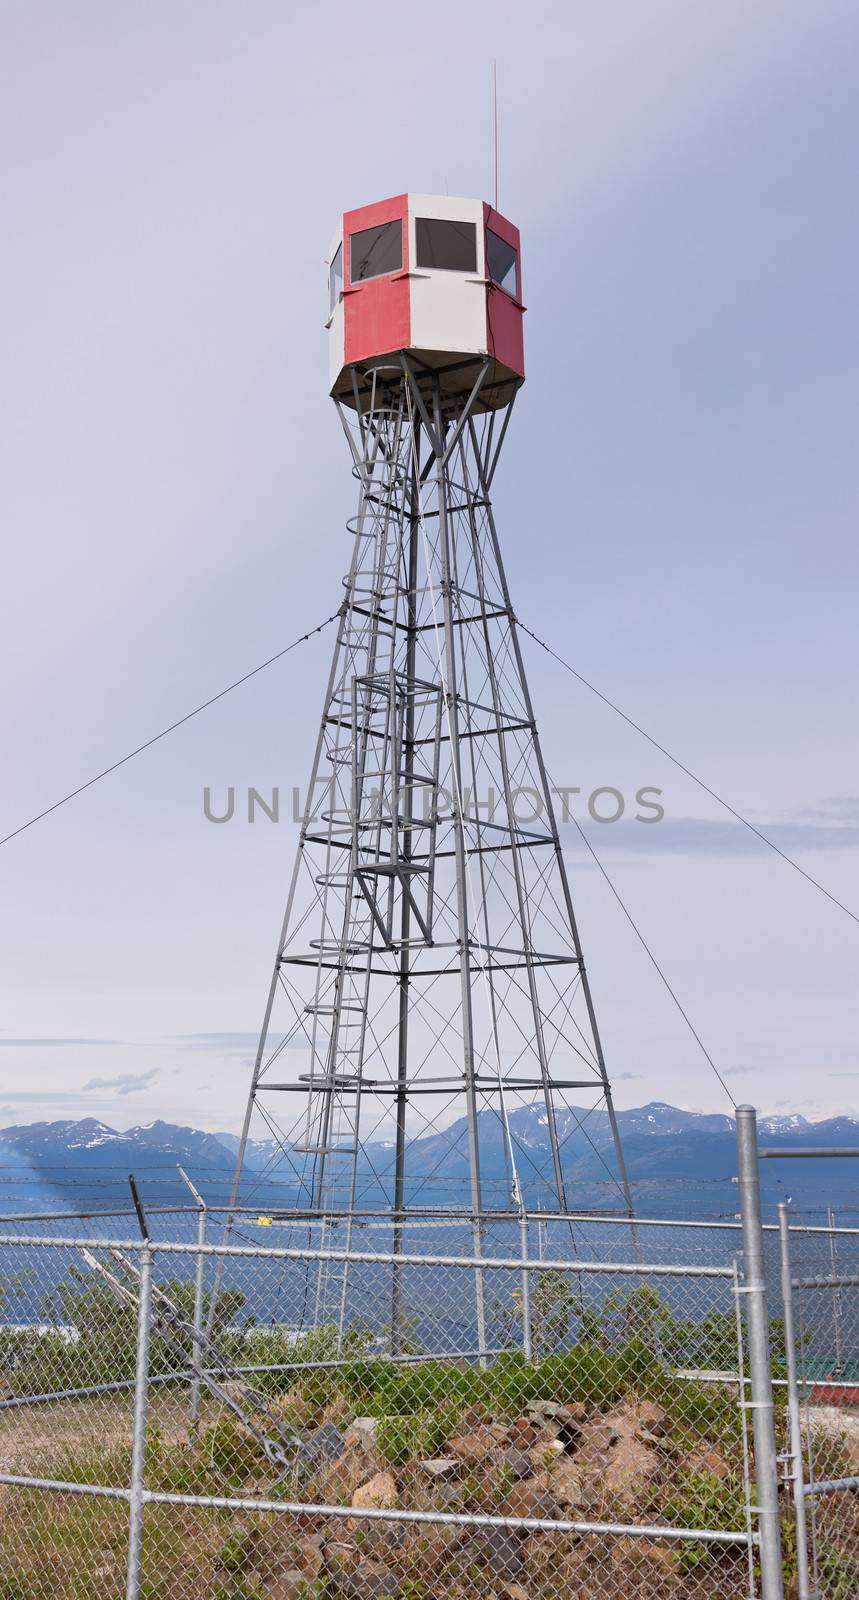 Forest fire watch tower near Tagish Yukon T Canada by PiLens